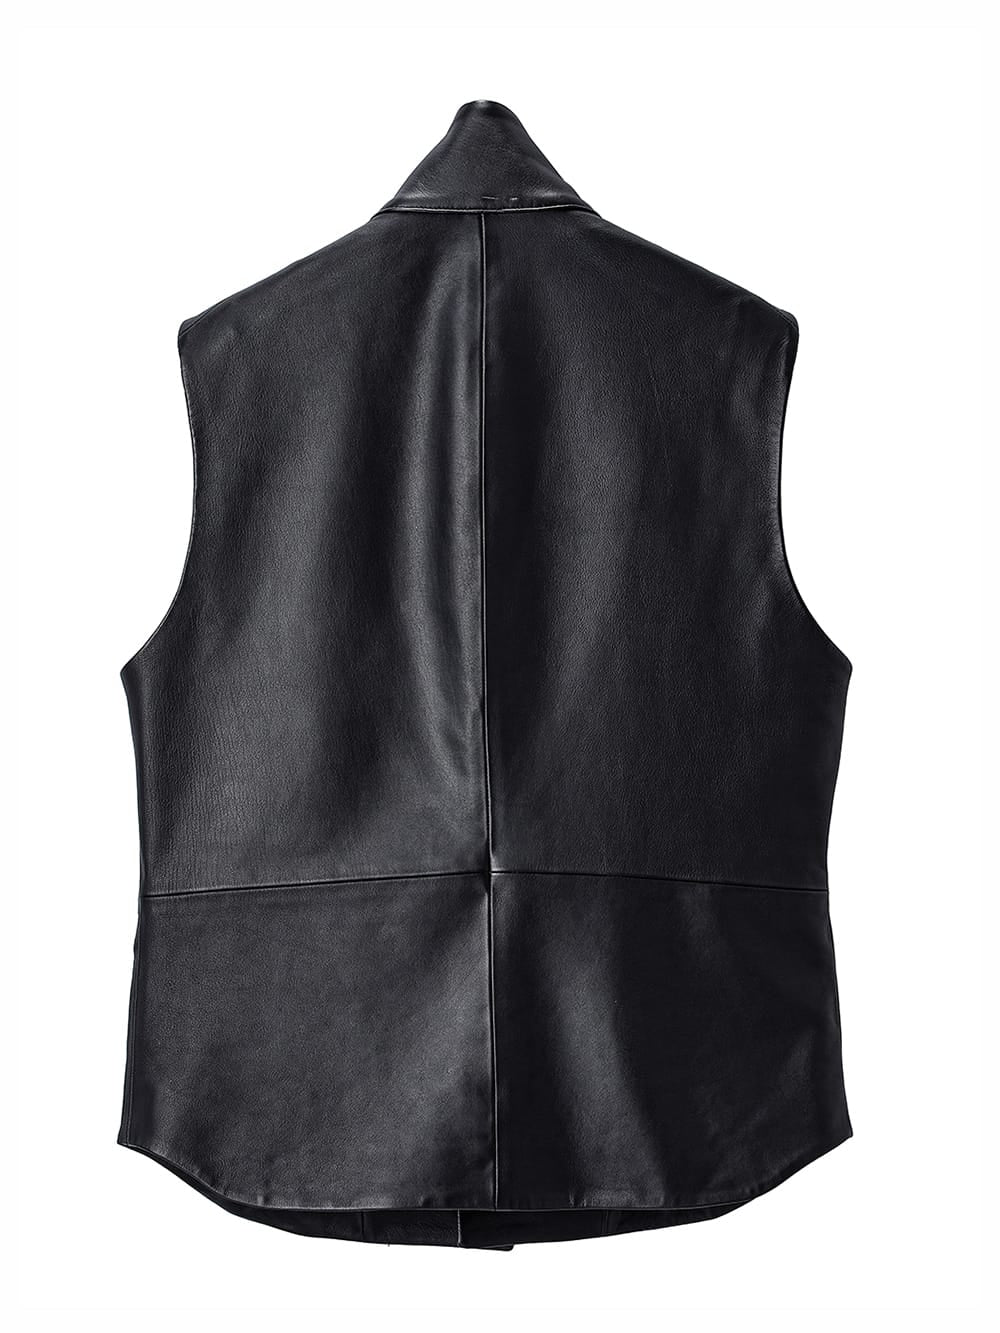 right - left sleeveless victorian jacket.(smooth）